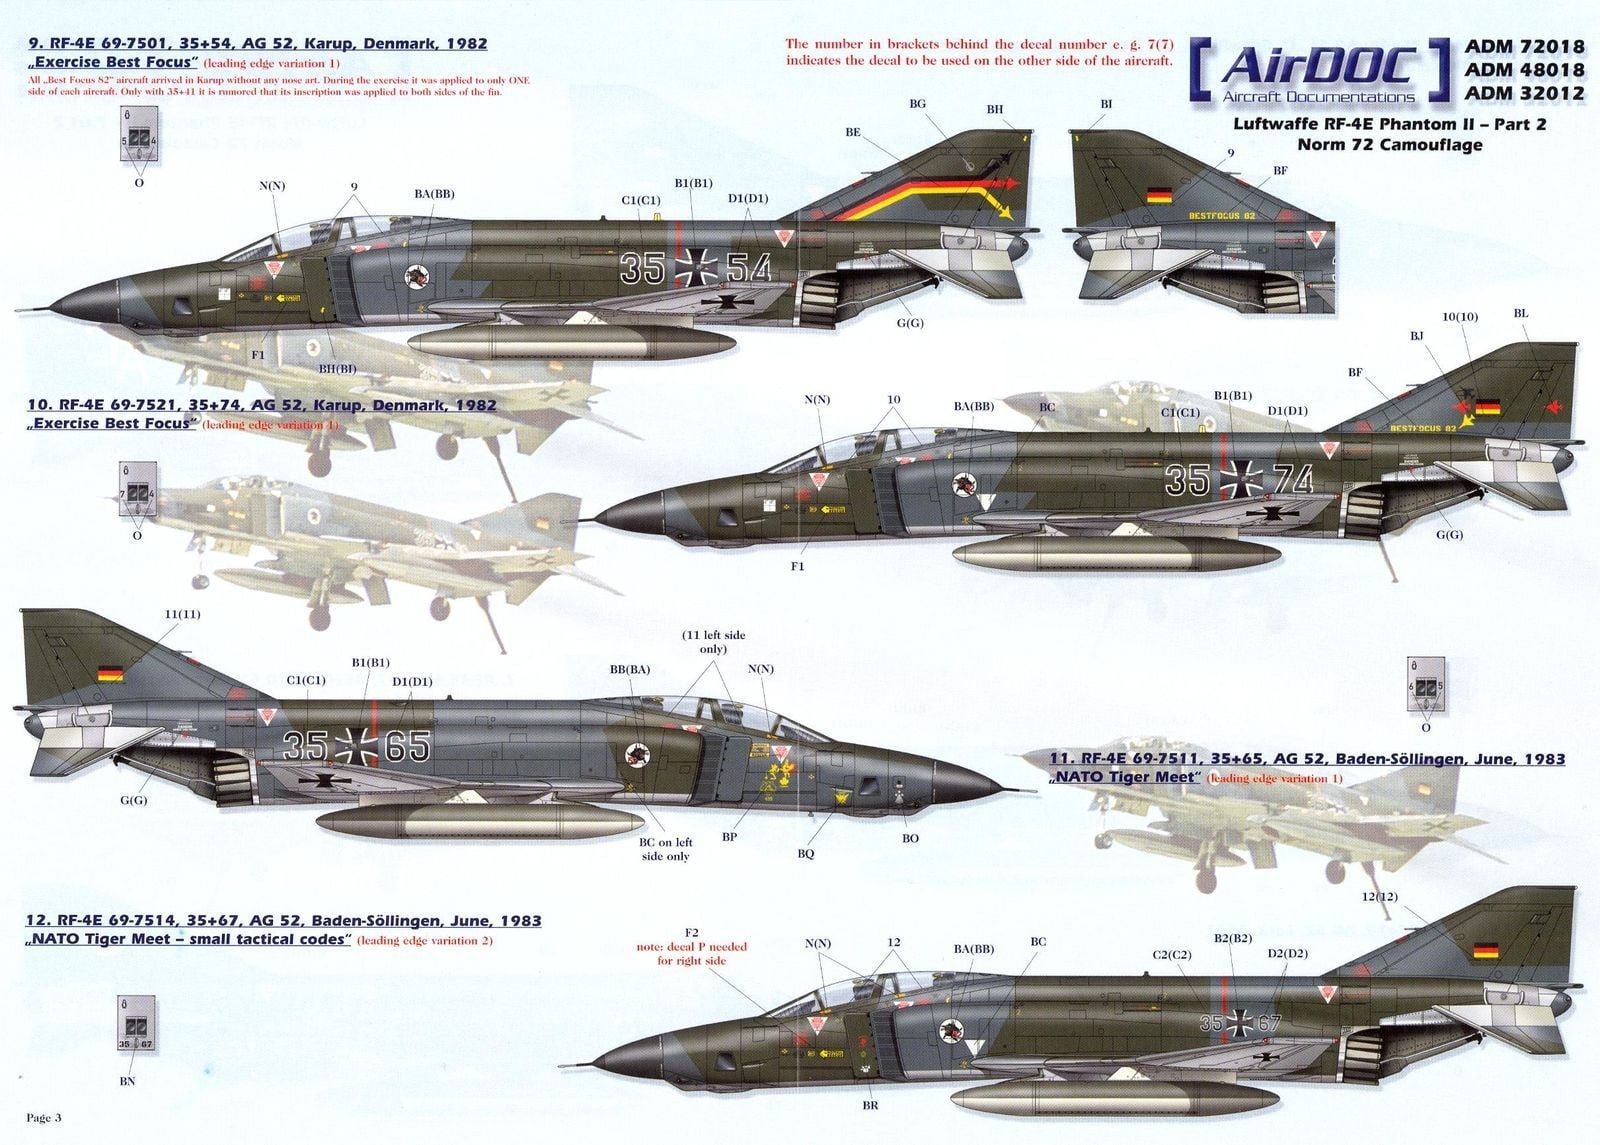 Airdoc ADM48018 1/48 McDonnell RF-4E Phantoms Luftwaffe Part 2 Model Decals - SGS Model Store